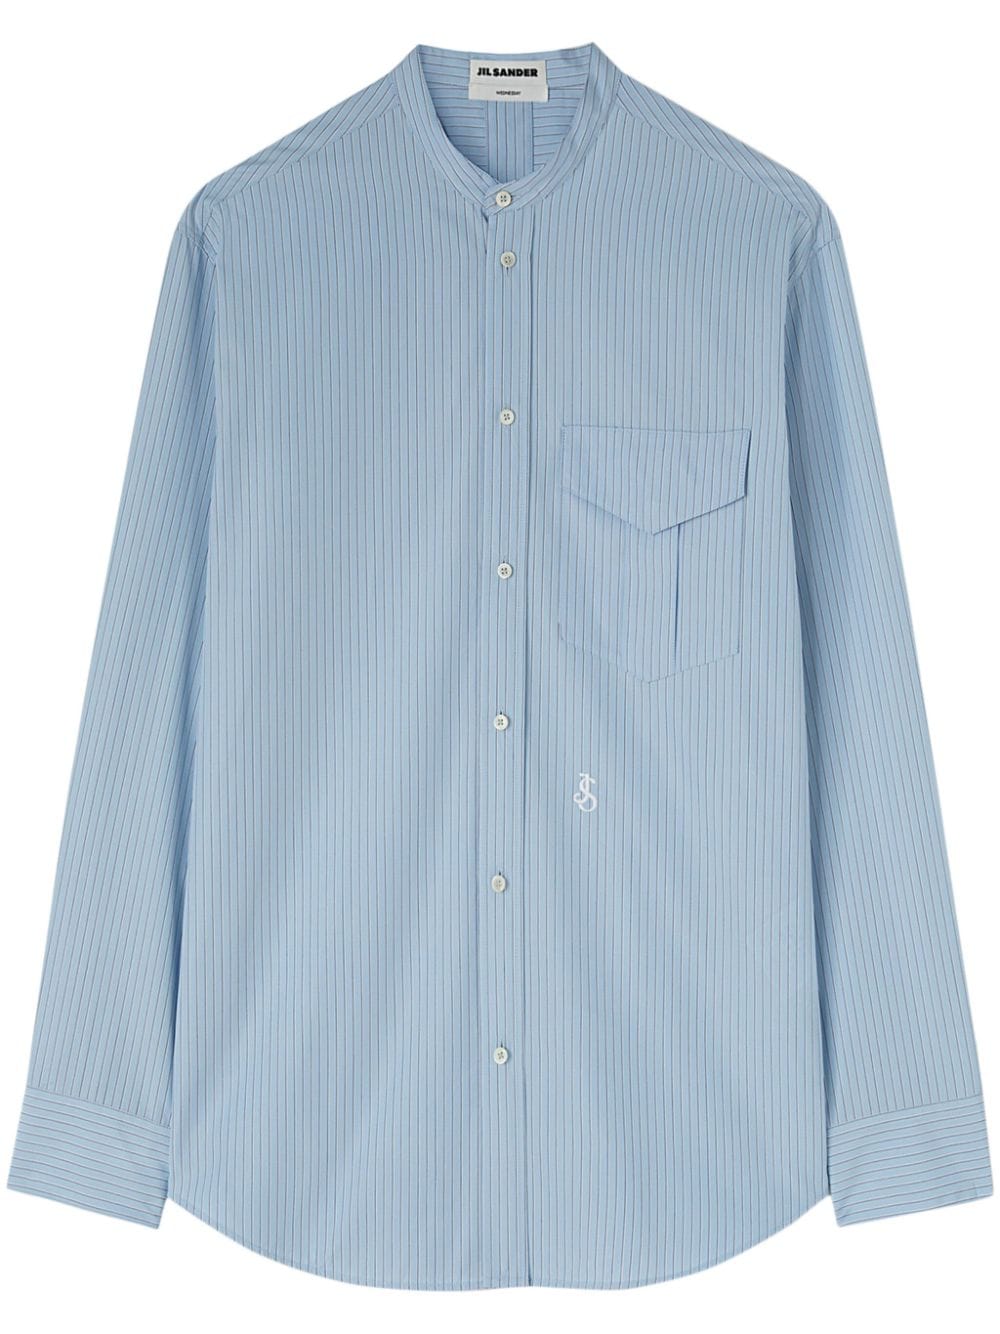 Jil Sander Wednesday striped cotton shirt - Blue